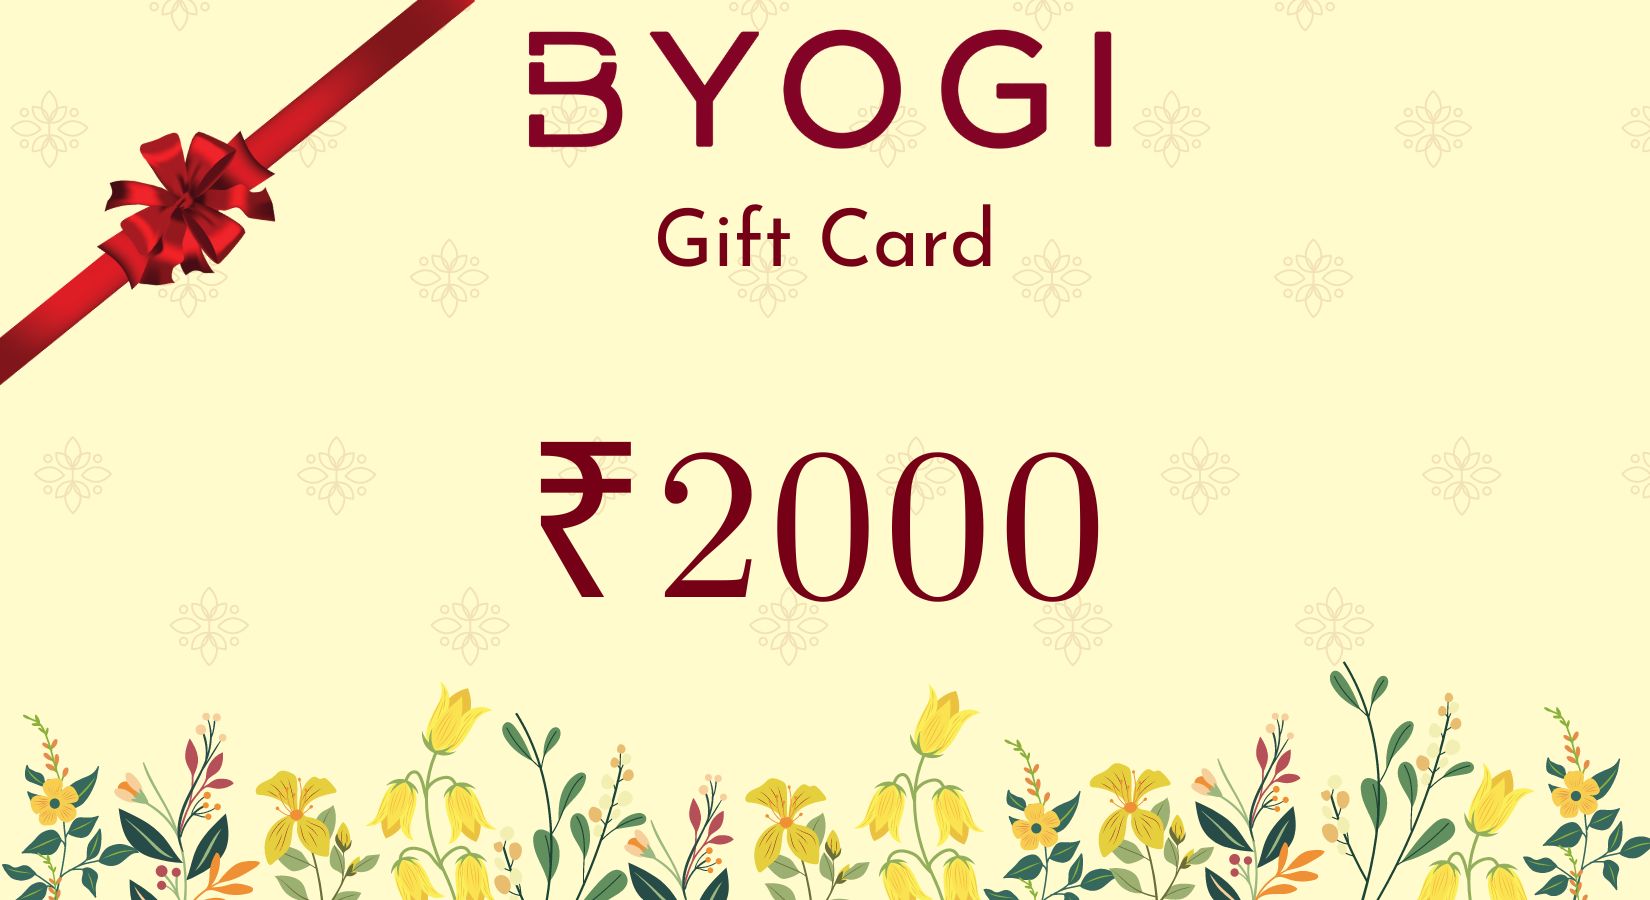 BYOGI Gift Card